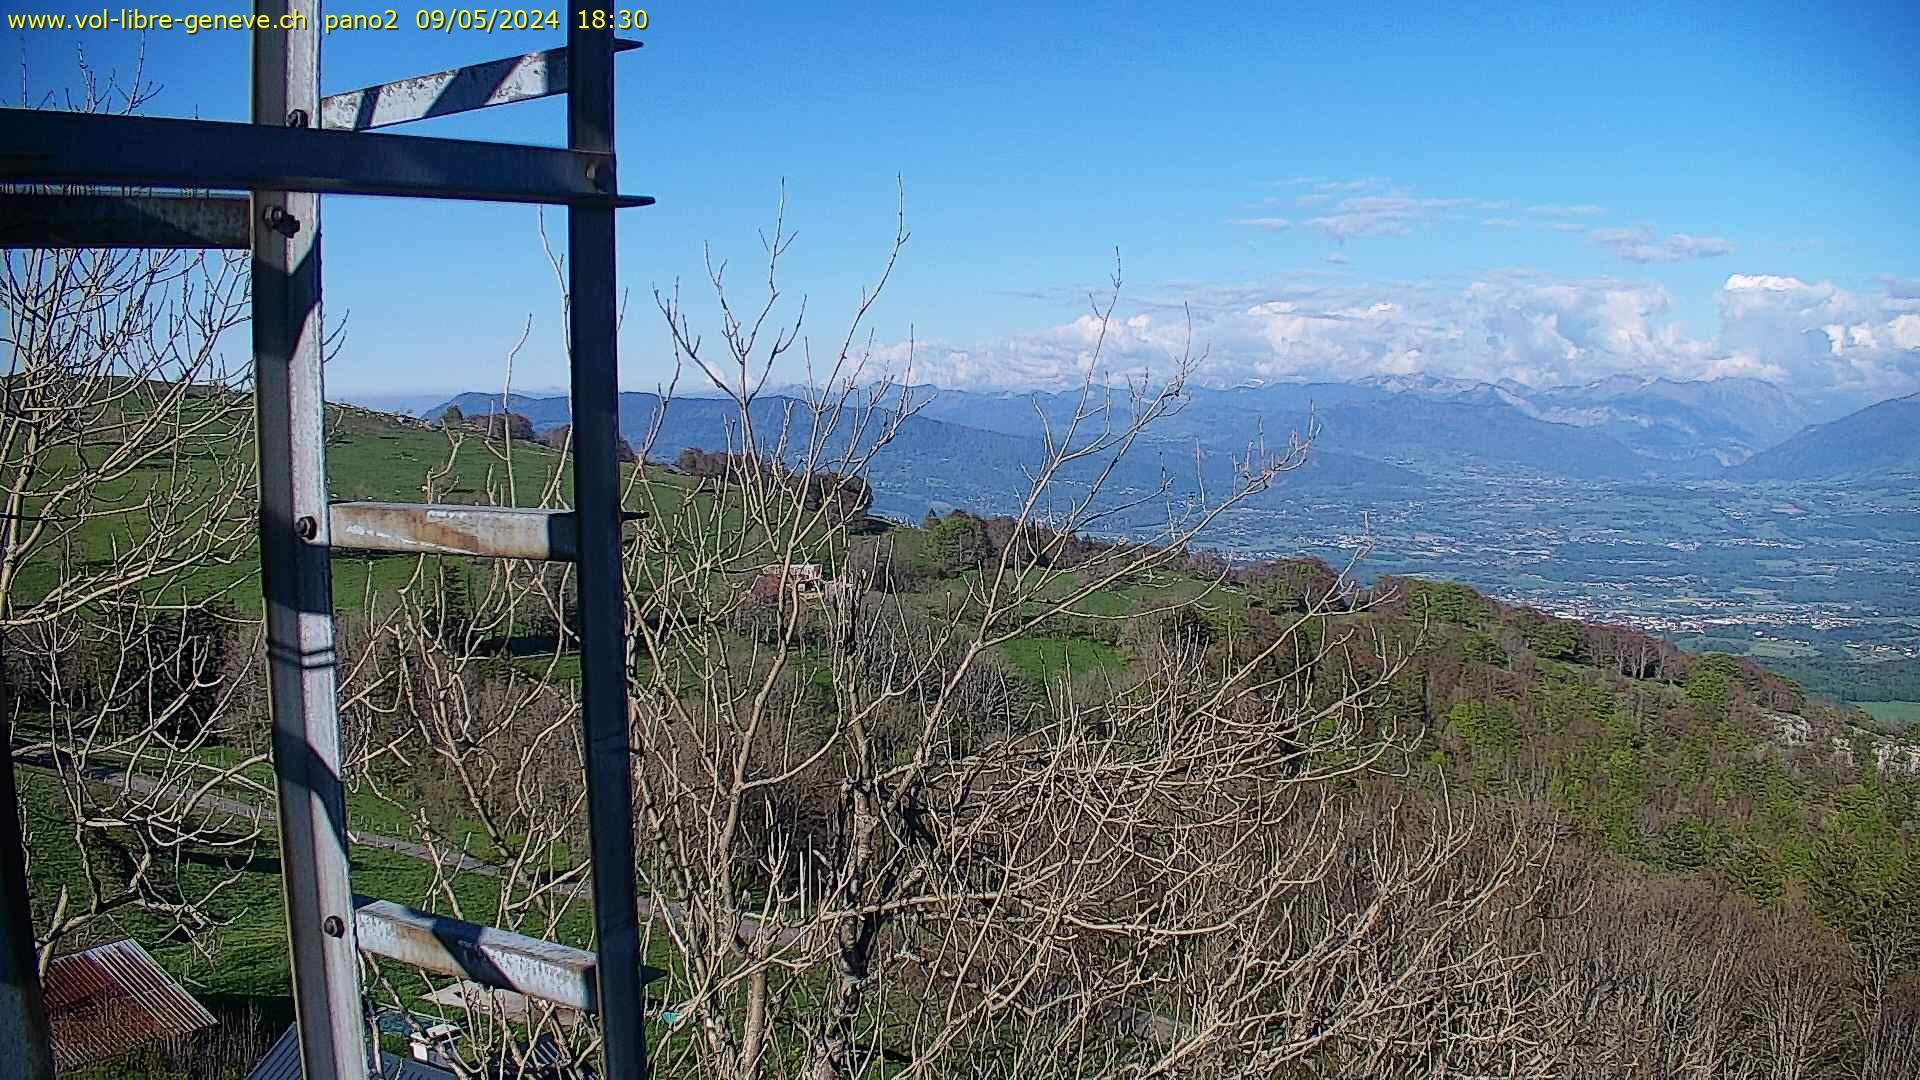 Monnetier-Mornex: Geneva from Saleve Mt